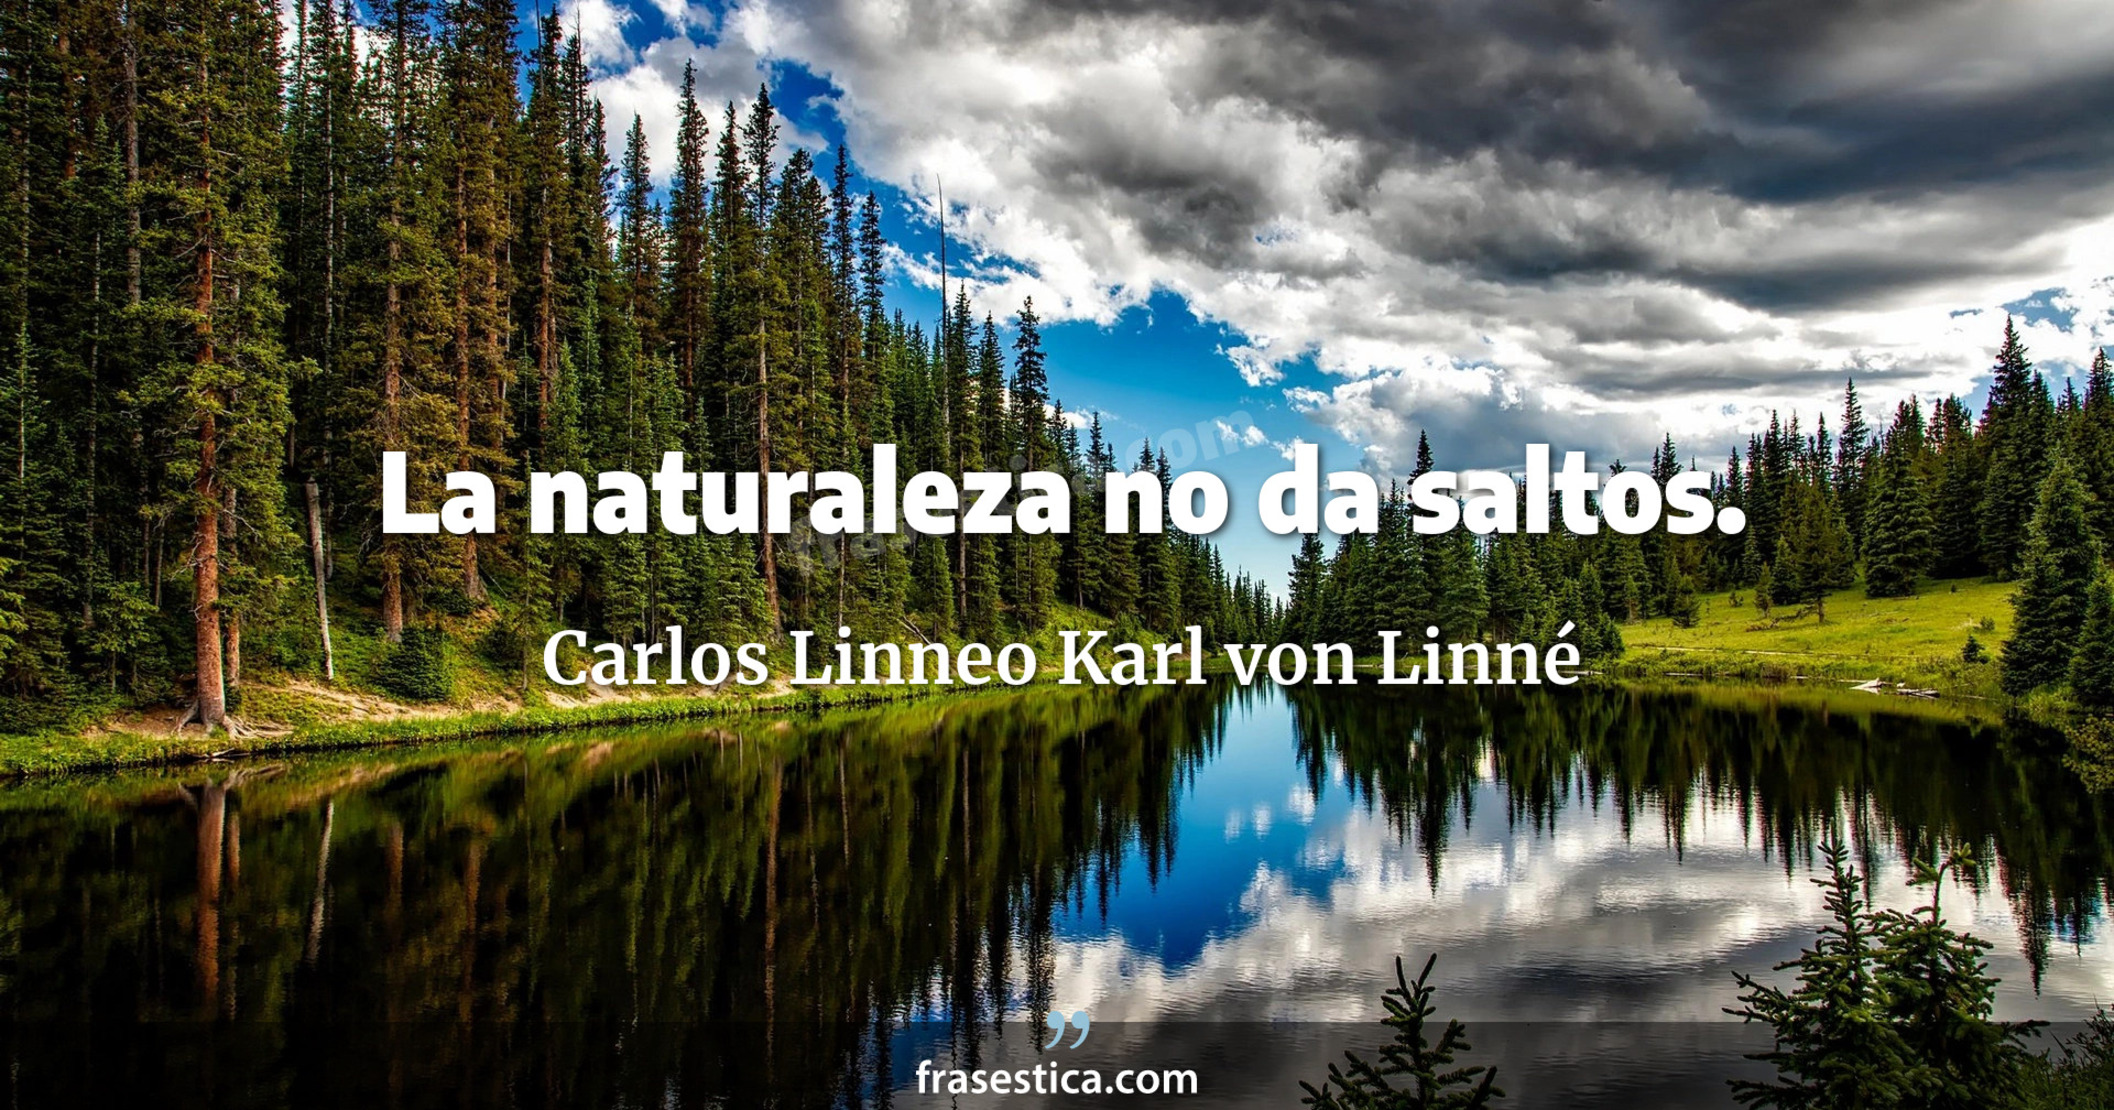 La naturaleza no da saltos. - Carlos Linneo Karl von Linné